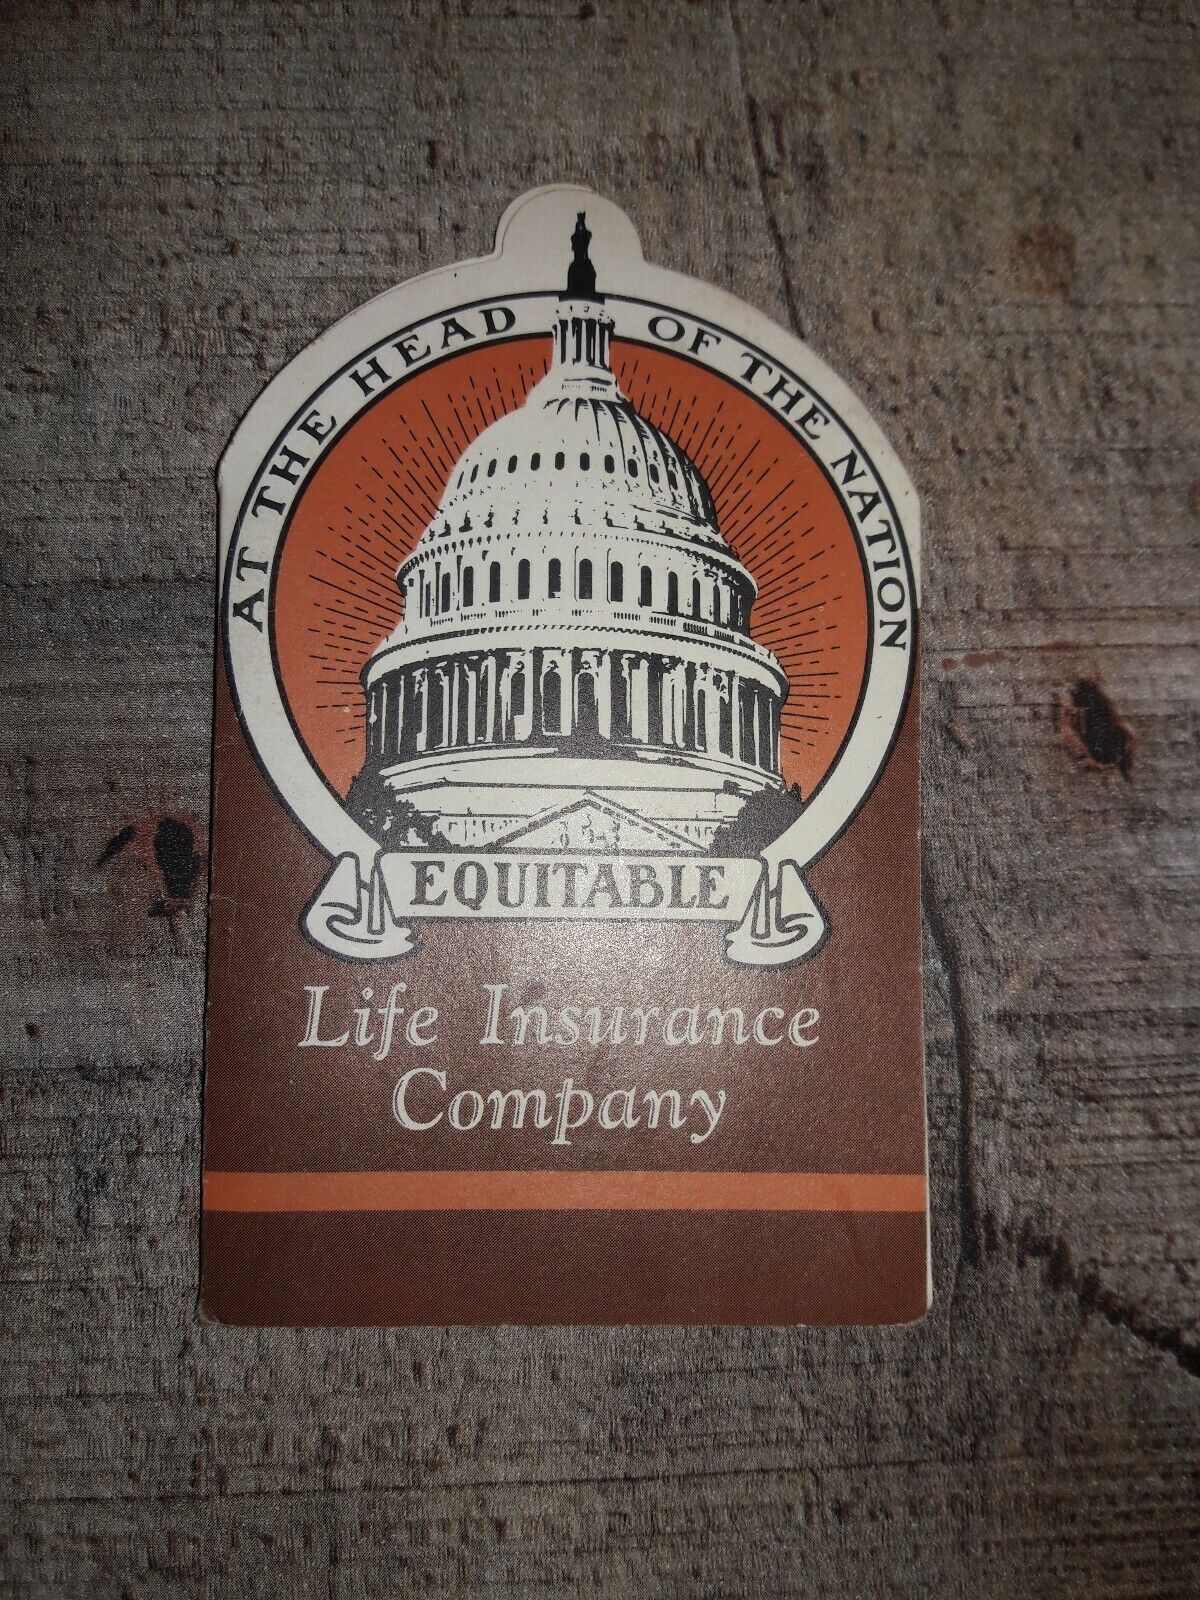 Equitable Life Insurance Washington DC advertising pack of sewing needles